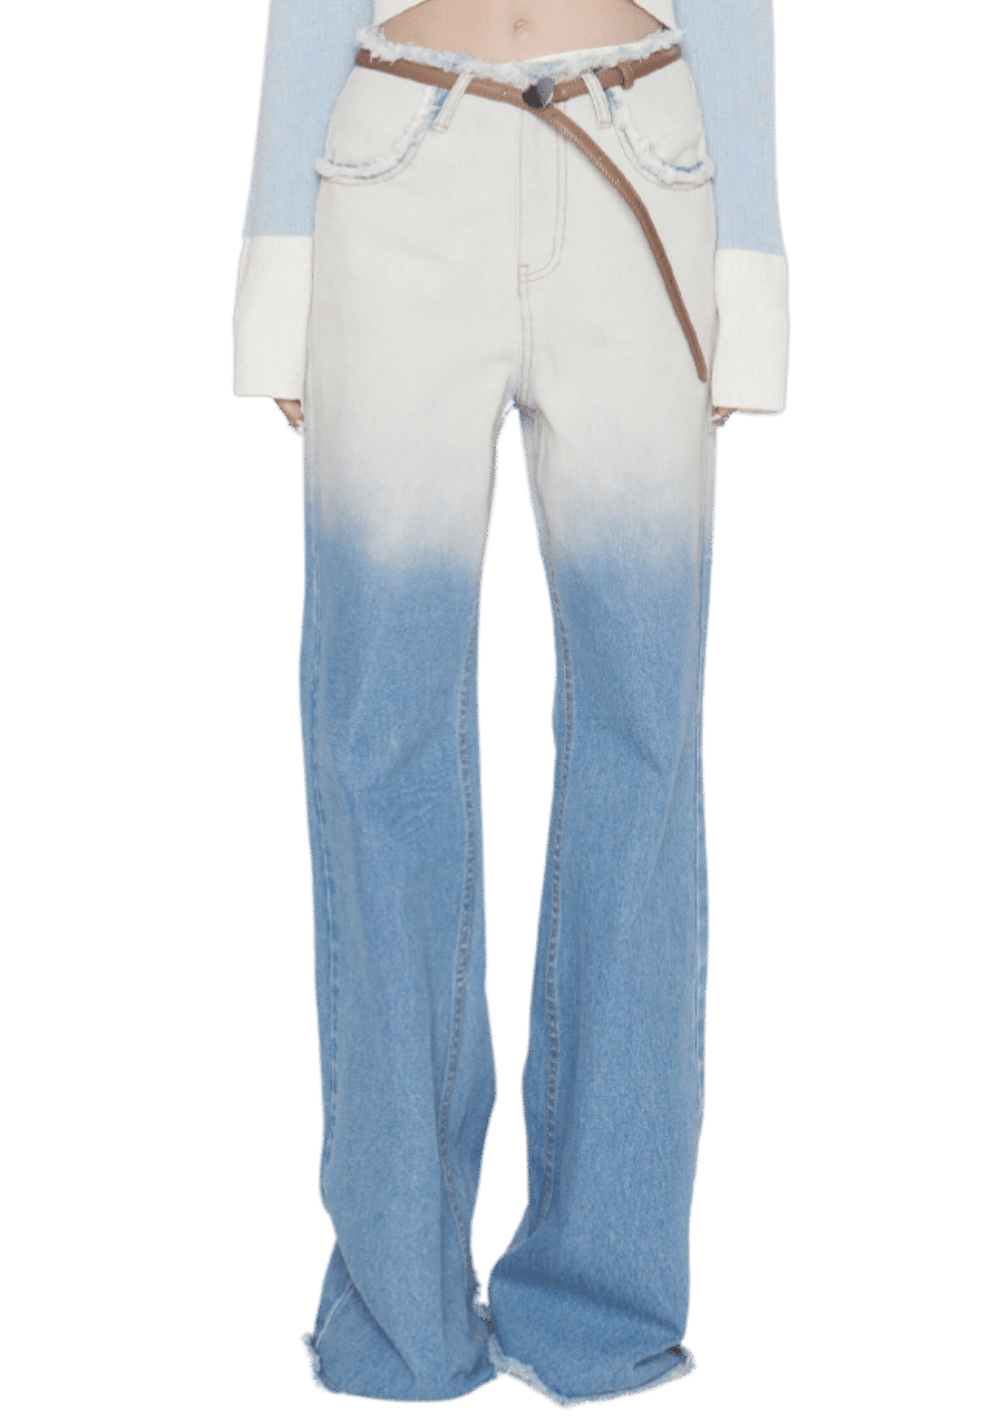 Gradient Denim Jeans - PSYLOS 1, Gradient Denim Jeans, shirt, LHC MODA, PSYLOS 1